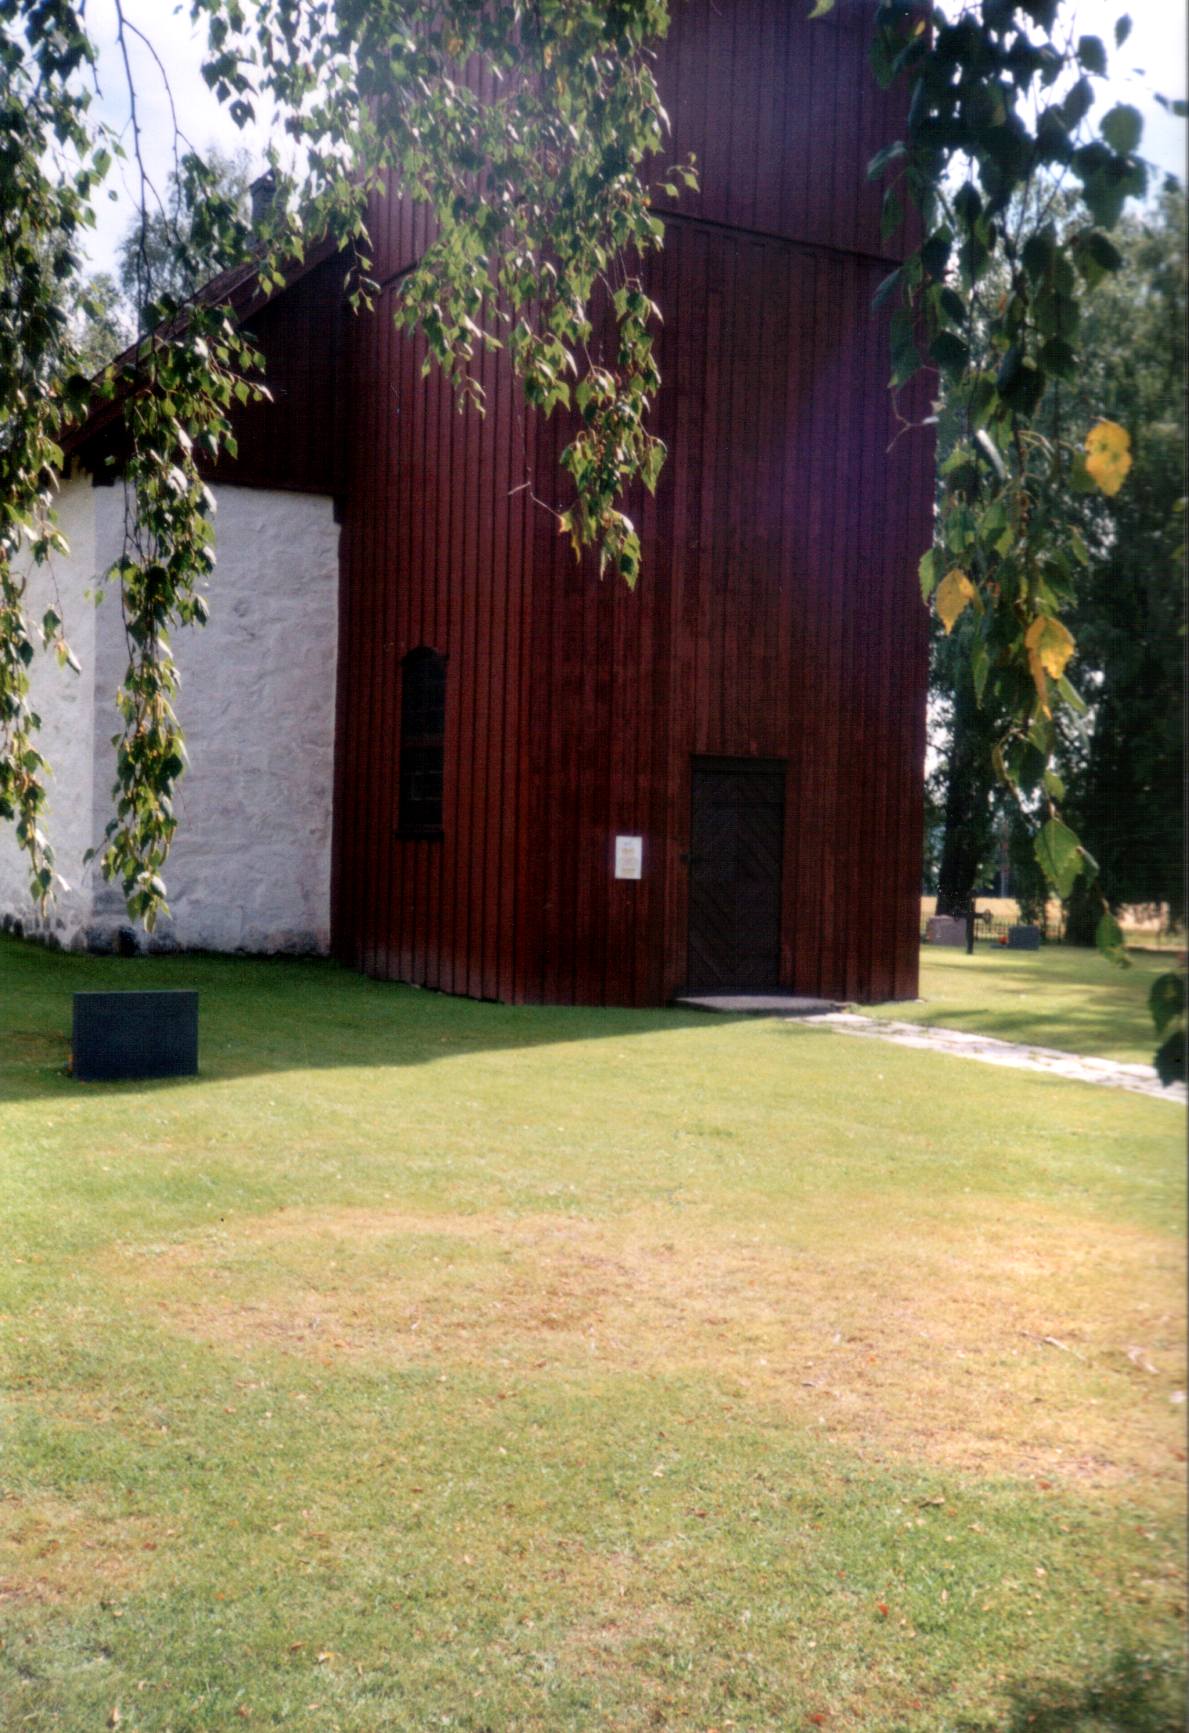 Romnes Kirke - inngangspartiet
Entrance porch